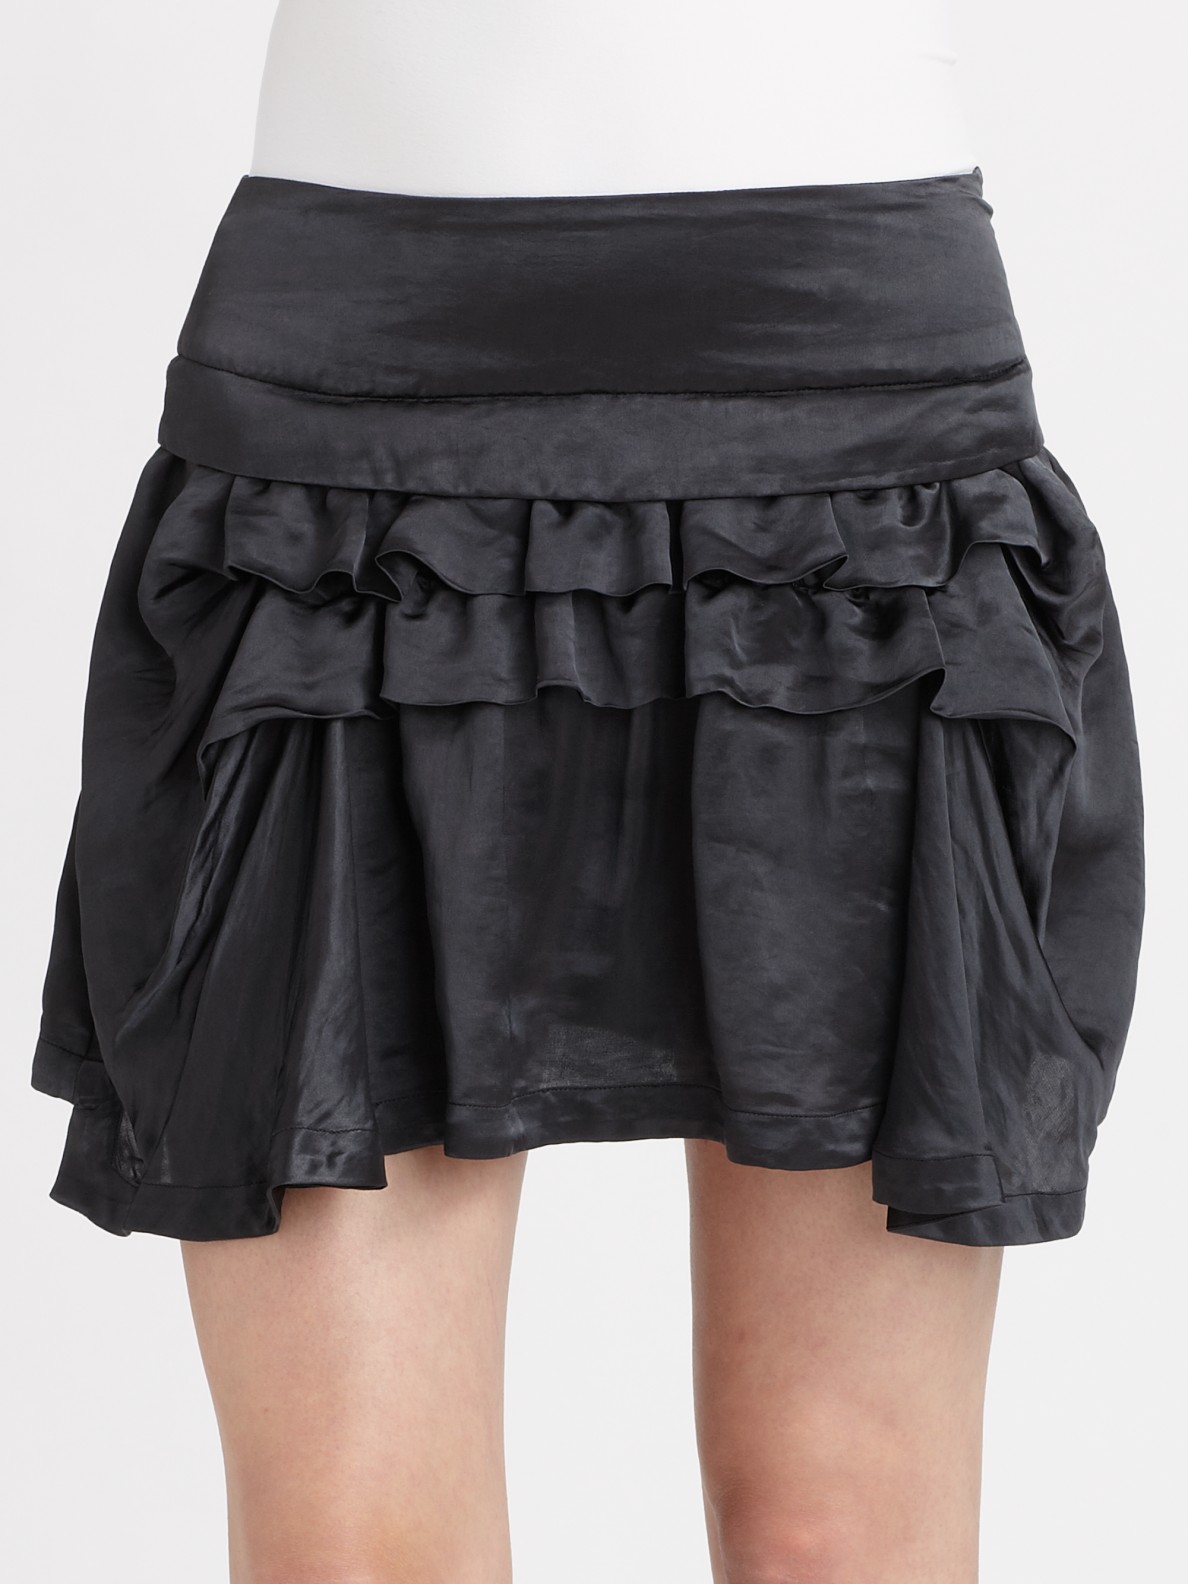 Theory Wimin Ruffled Mini Skirt in Black - Lyst